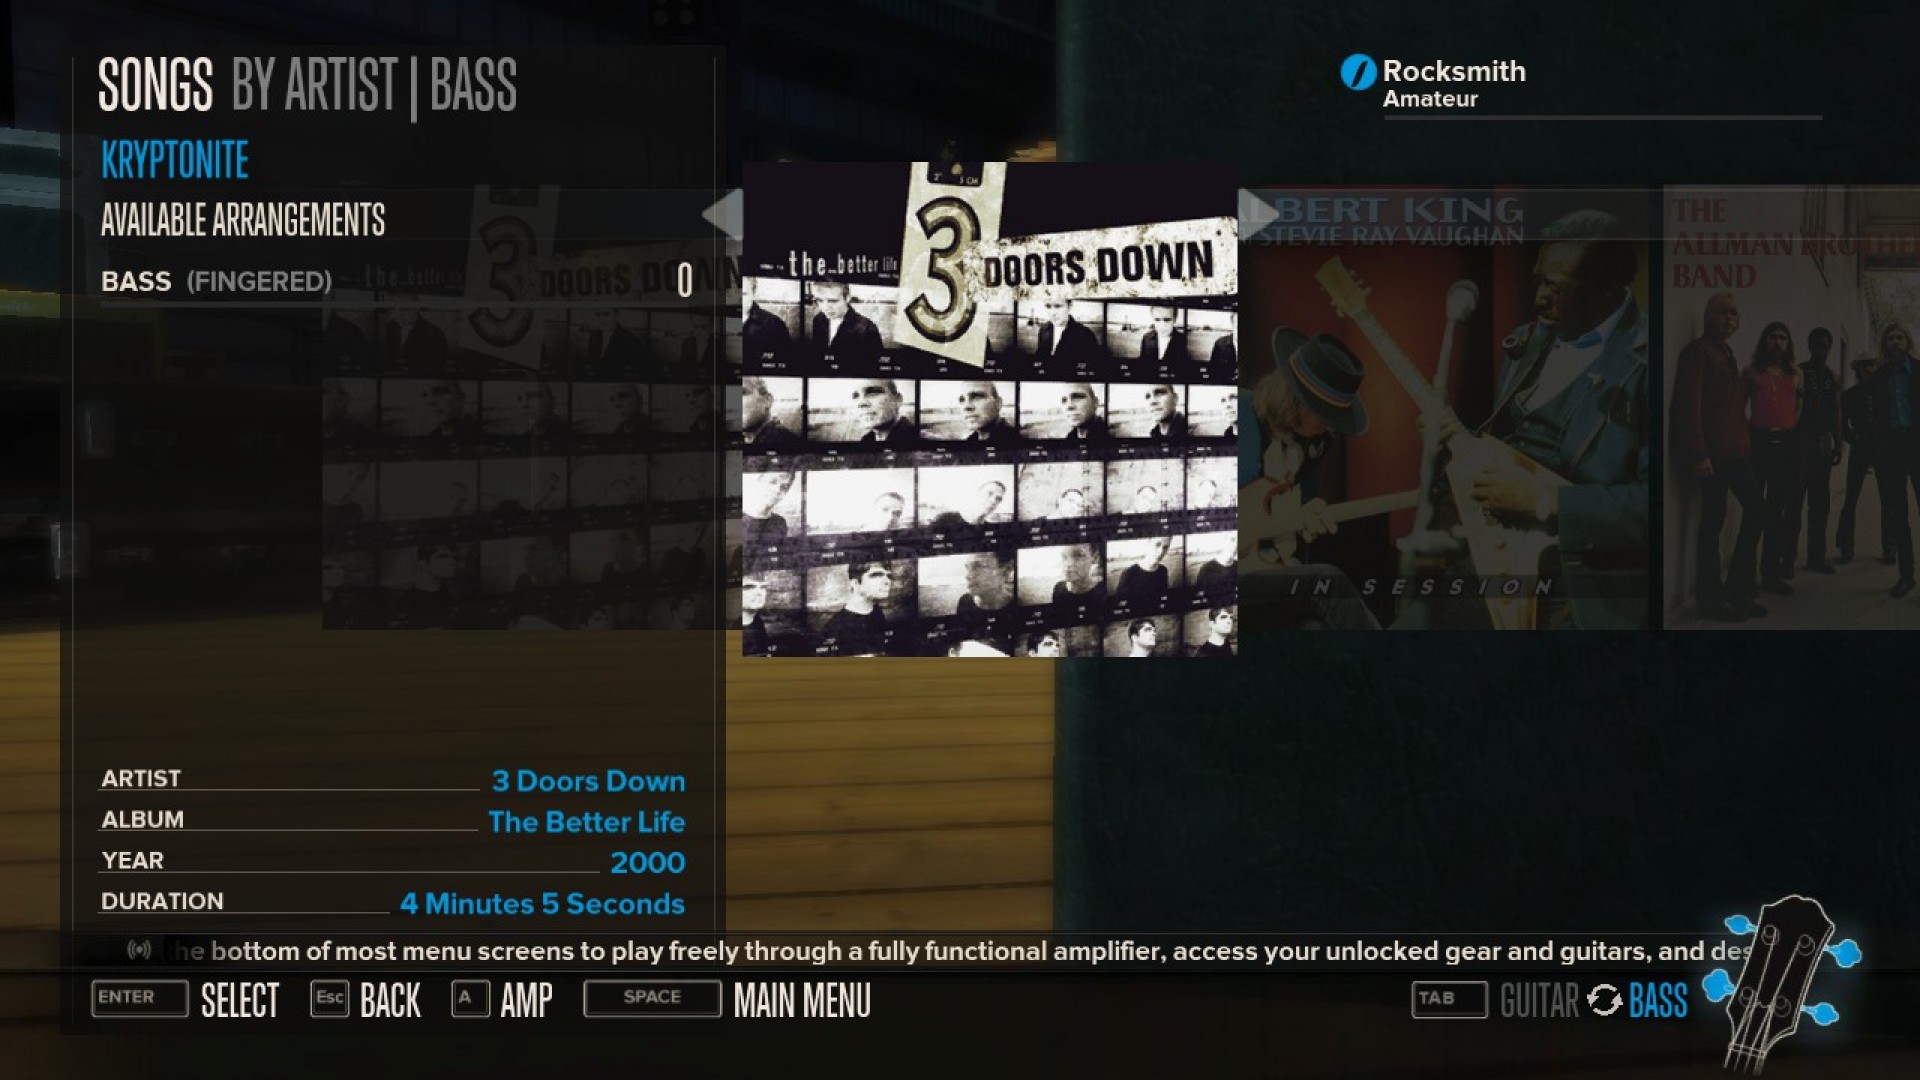 Rocksmith - 3 Doors Down - Kryptonite screenshot